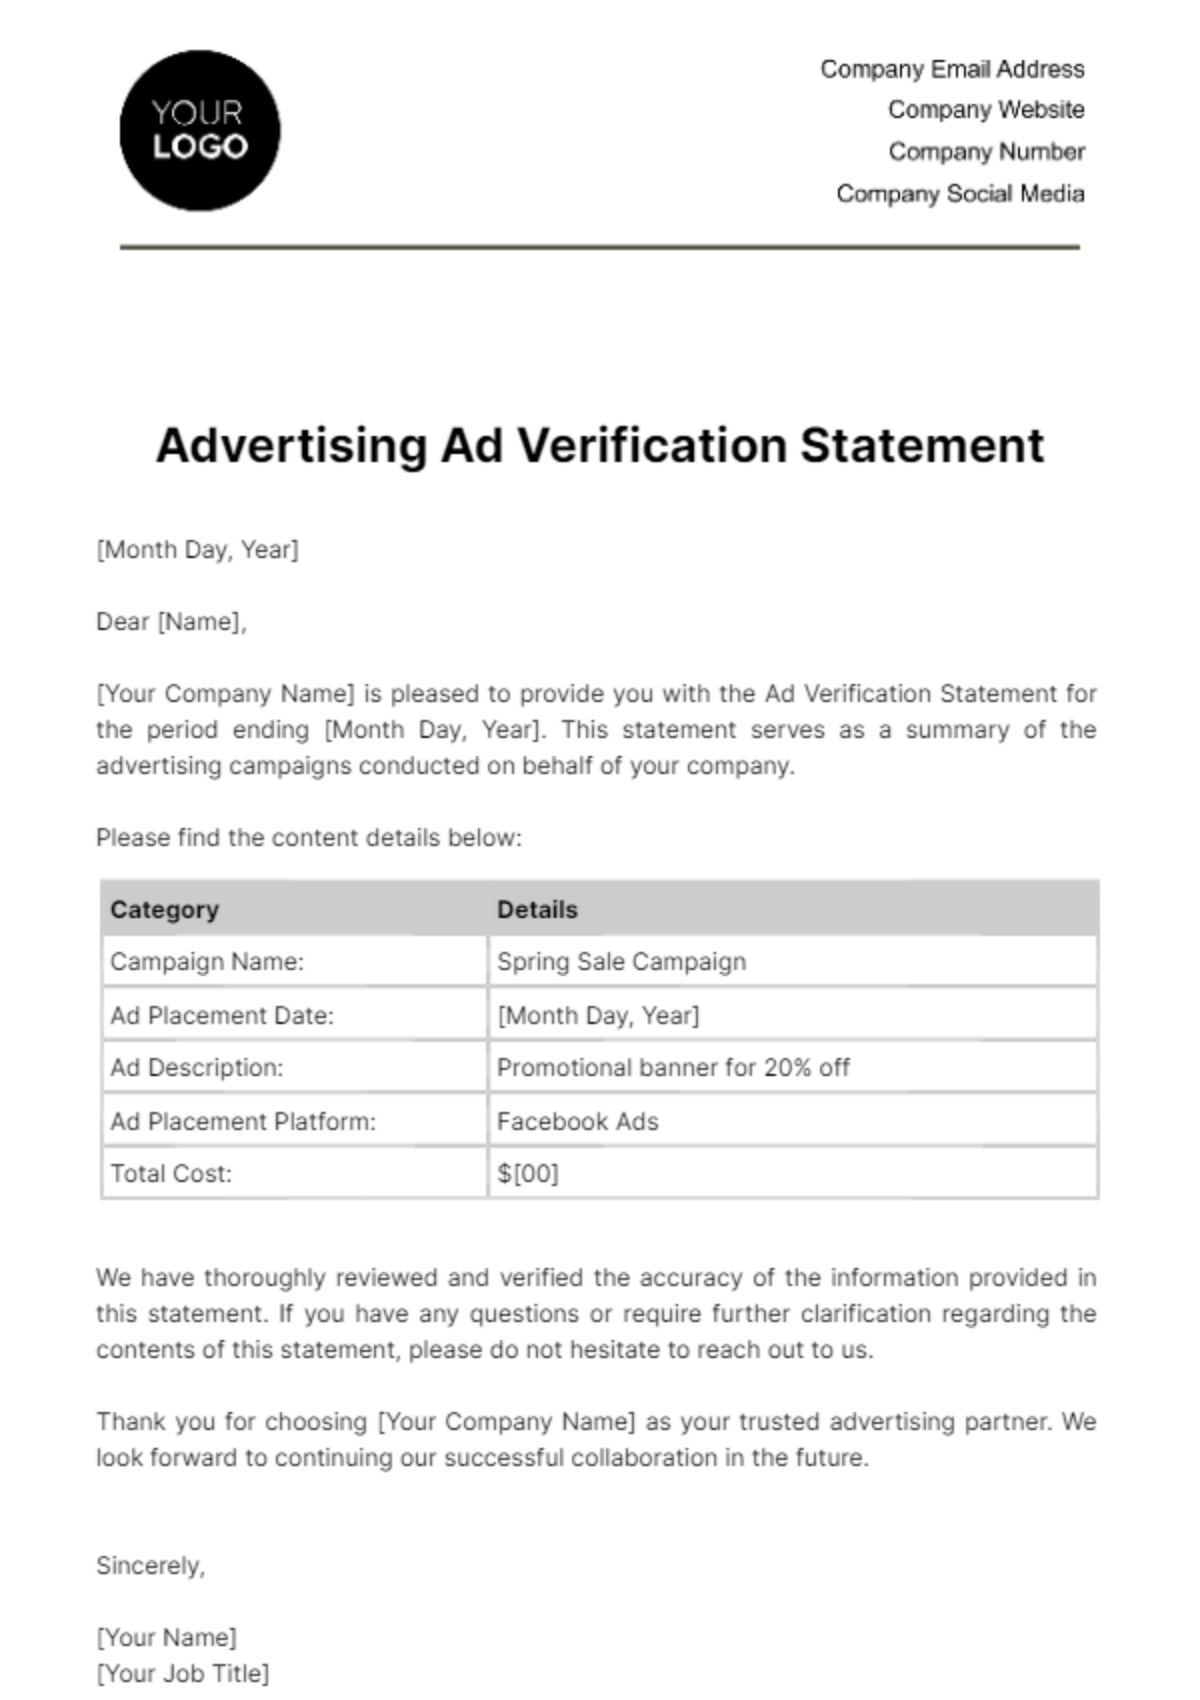 Advertising Ad Verification Statement Template